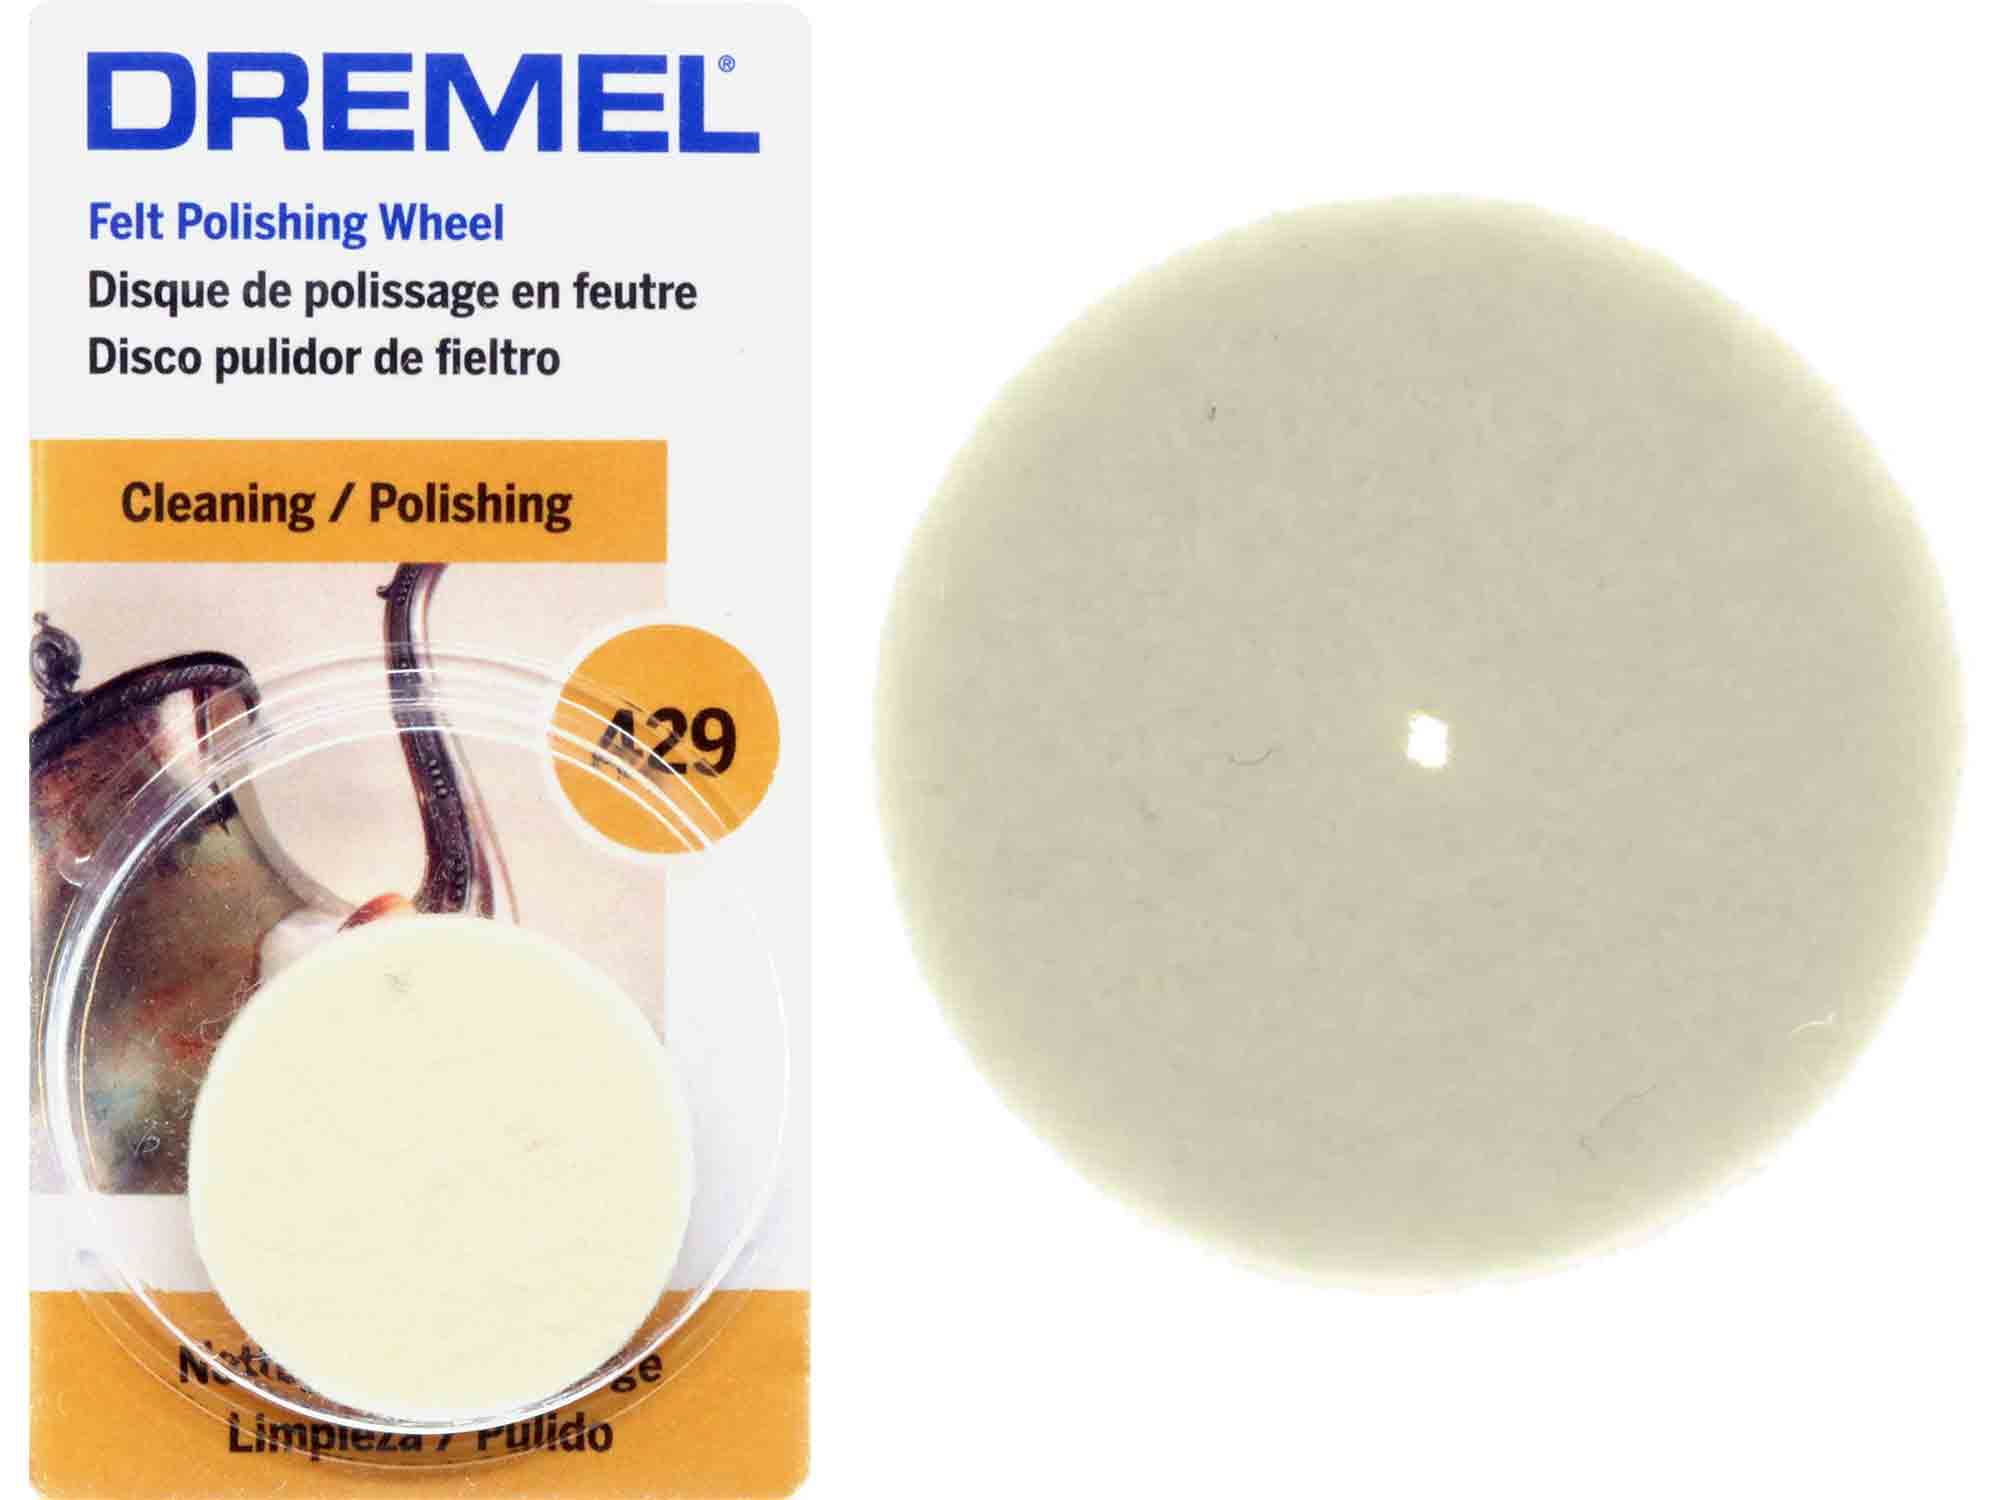 Dremel 429 - Felt Polishing Wheel